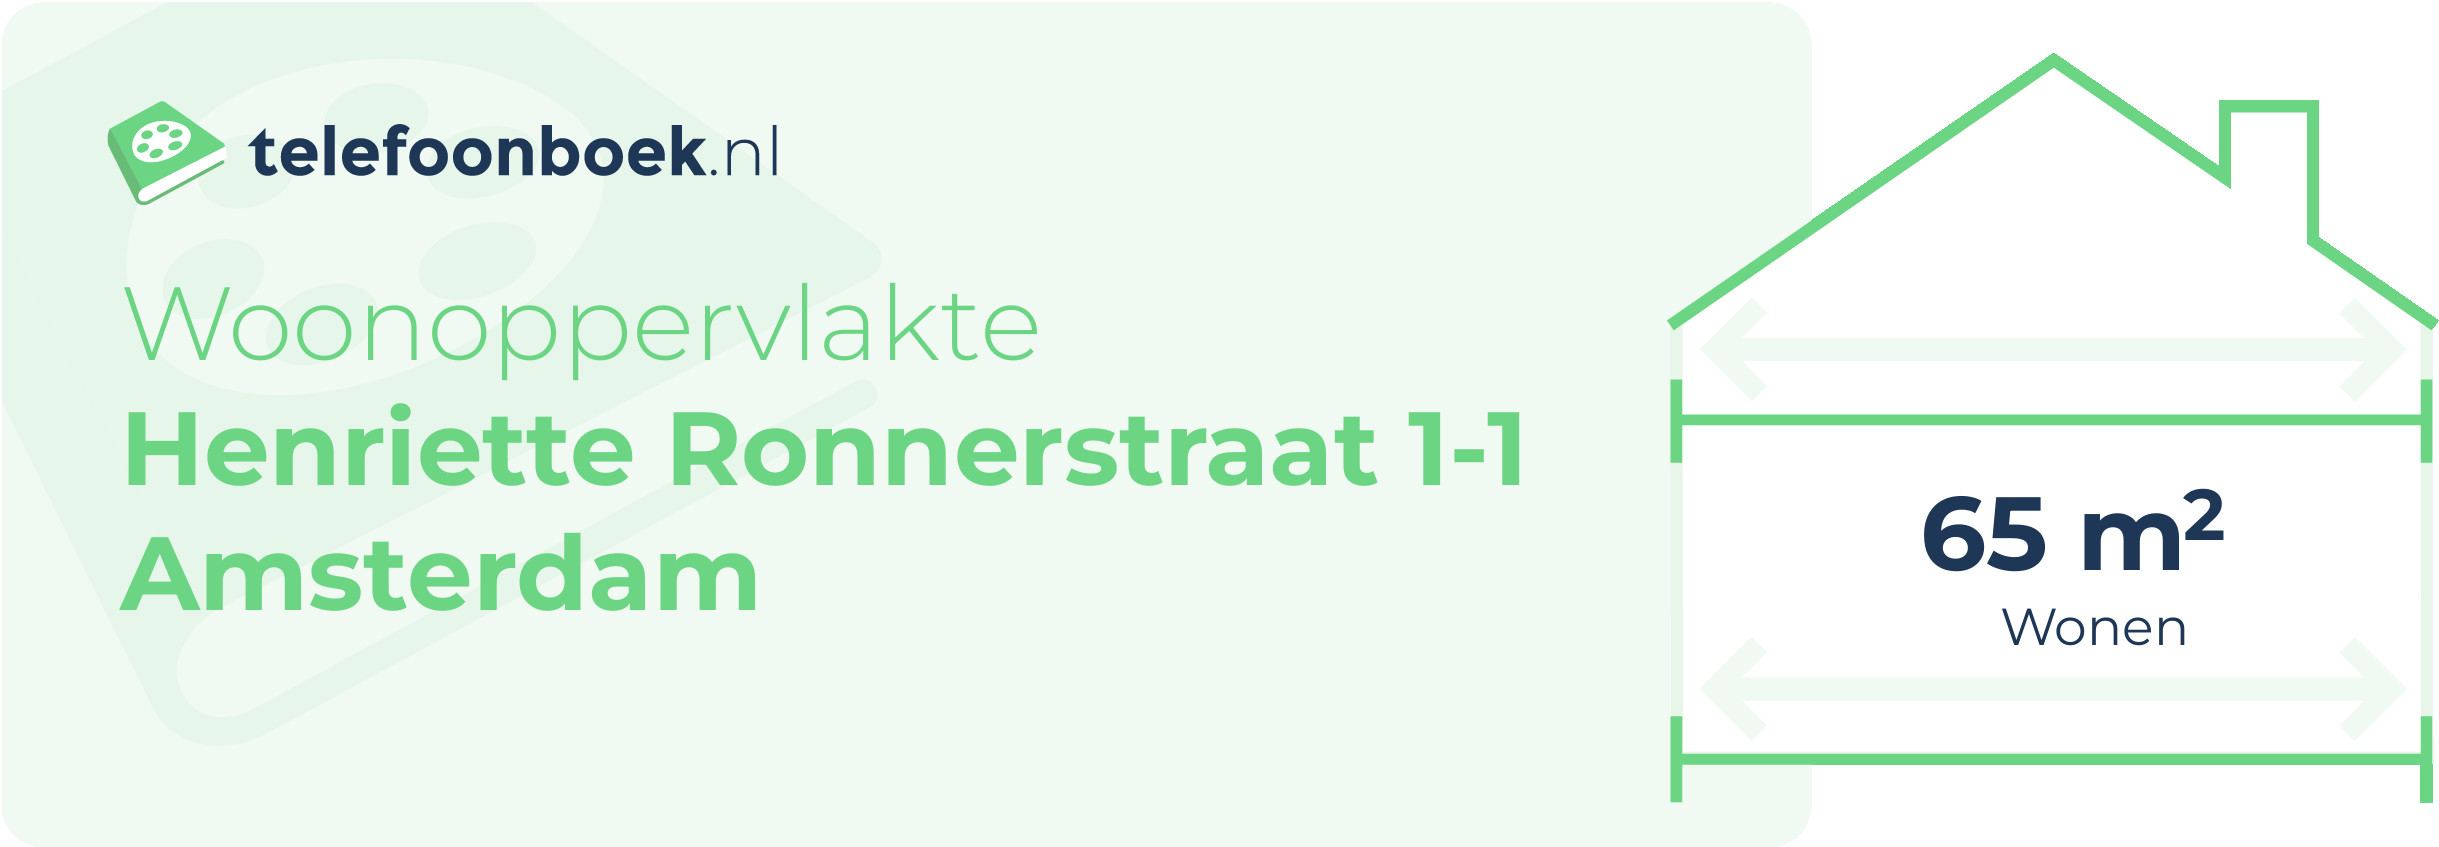 Woonoppervlakte Henriette Ronnerstraat 1-1 Amsterdam